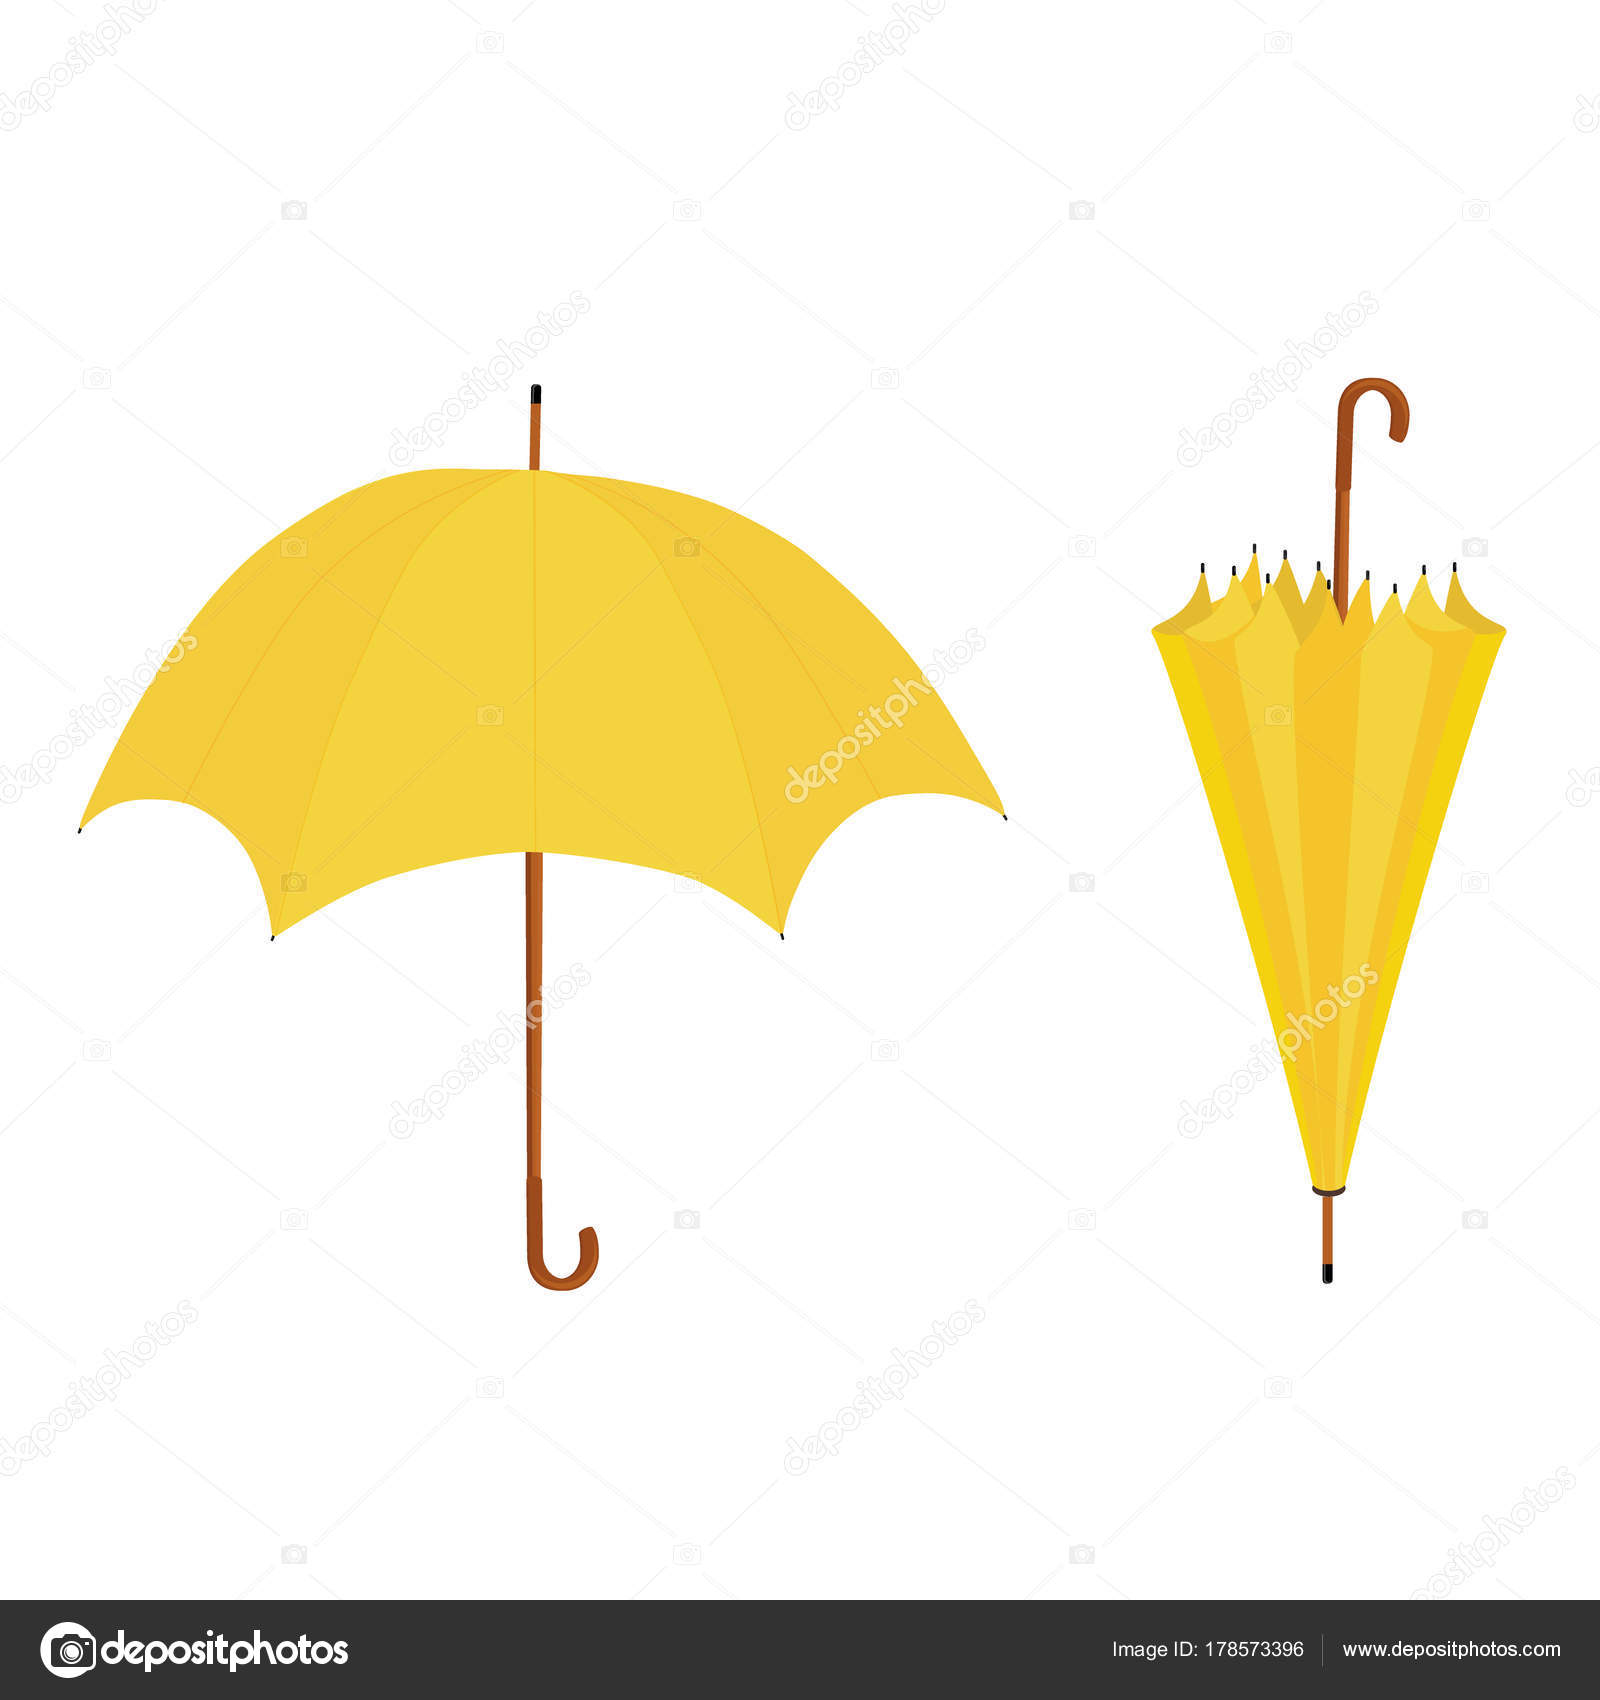 Download Free Photo Yellow Umbrella Object Protection Rain Free Download Jooinn PSD Mockup Templates